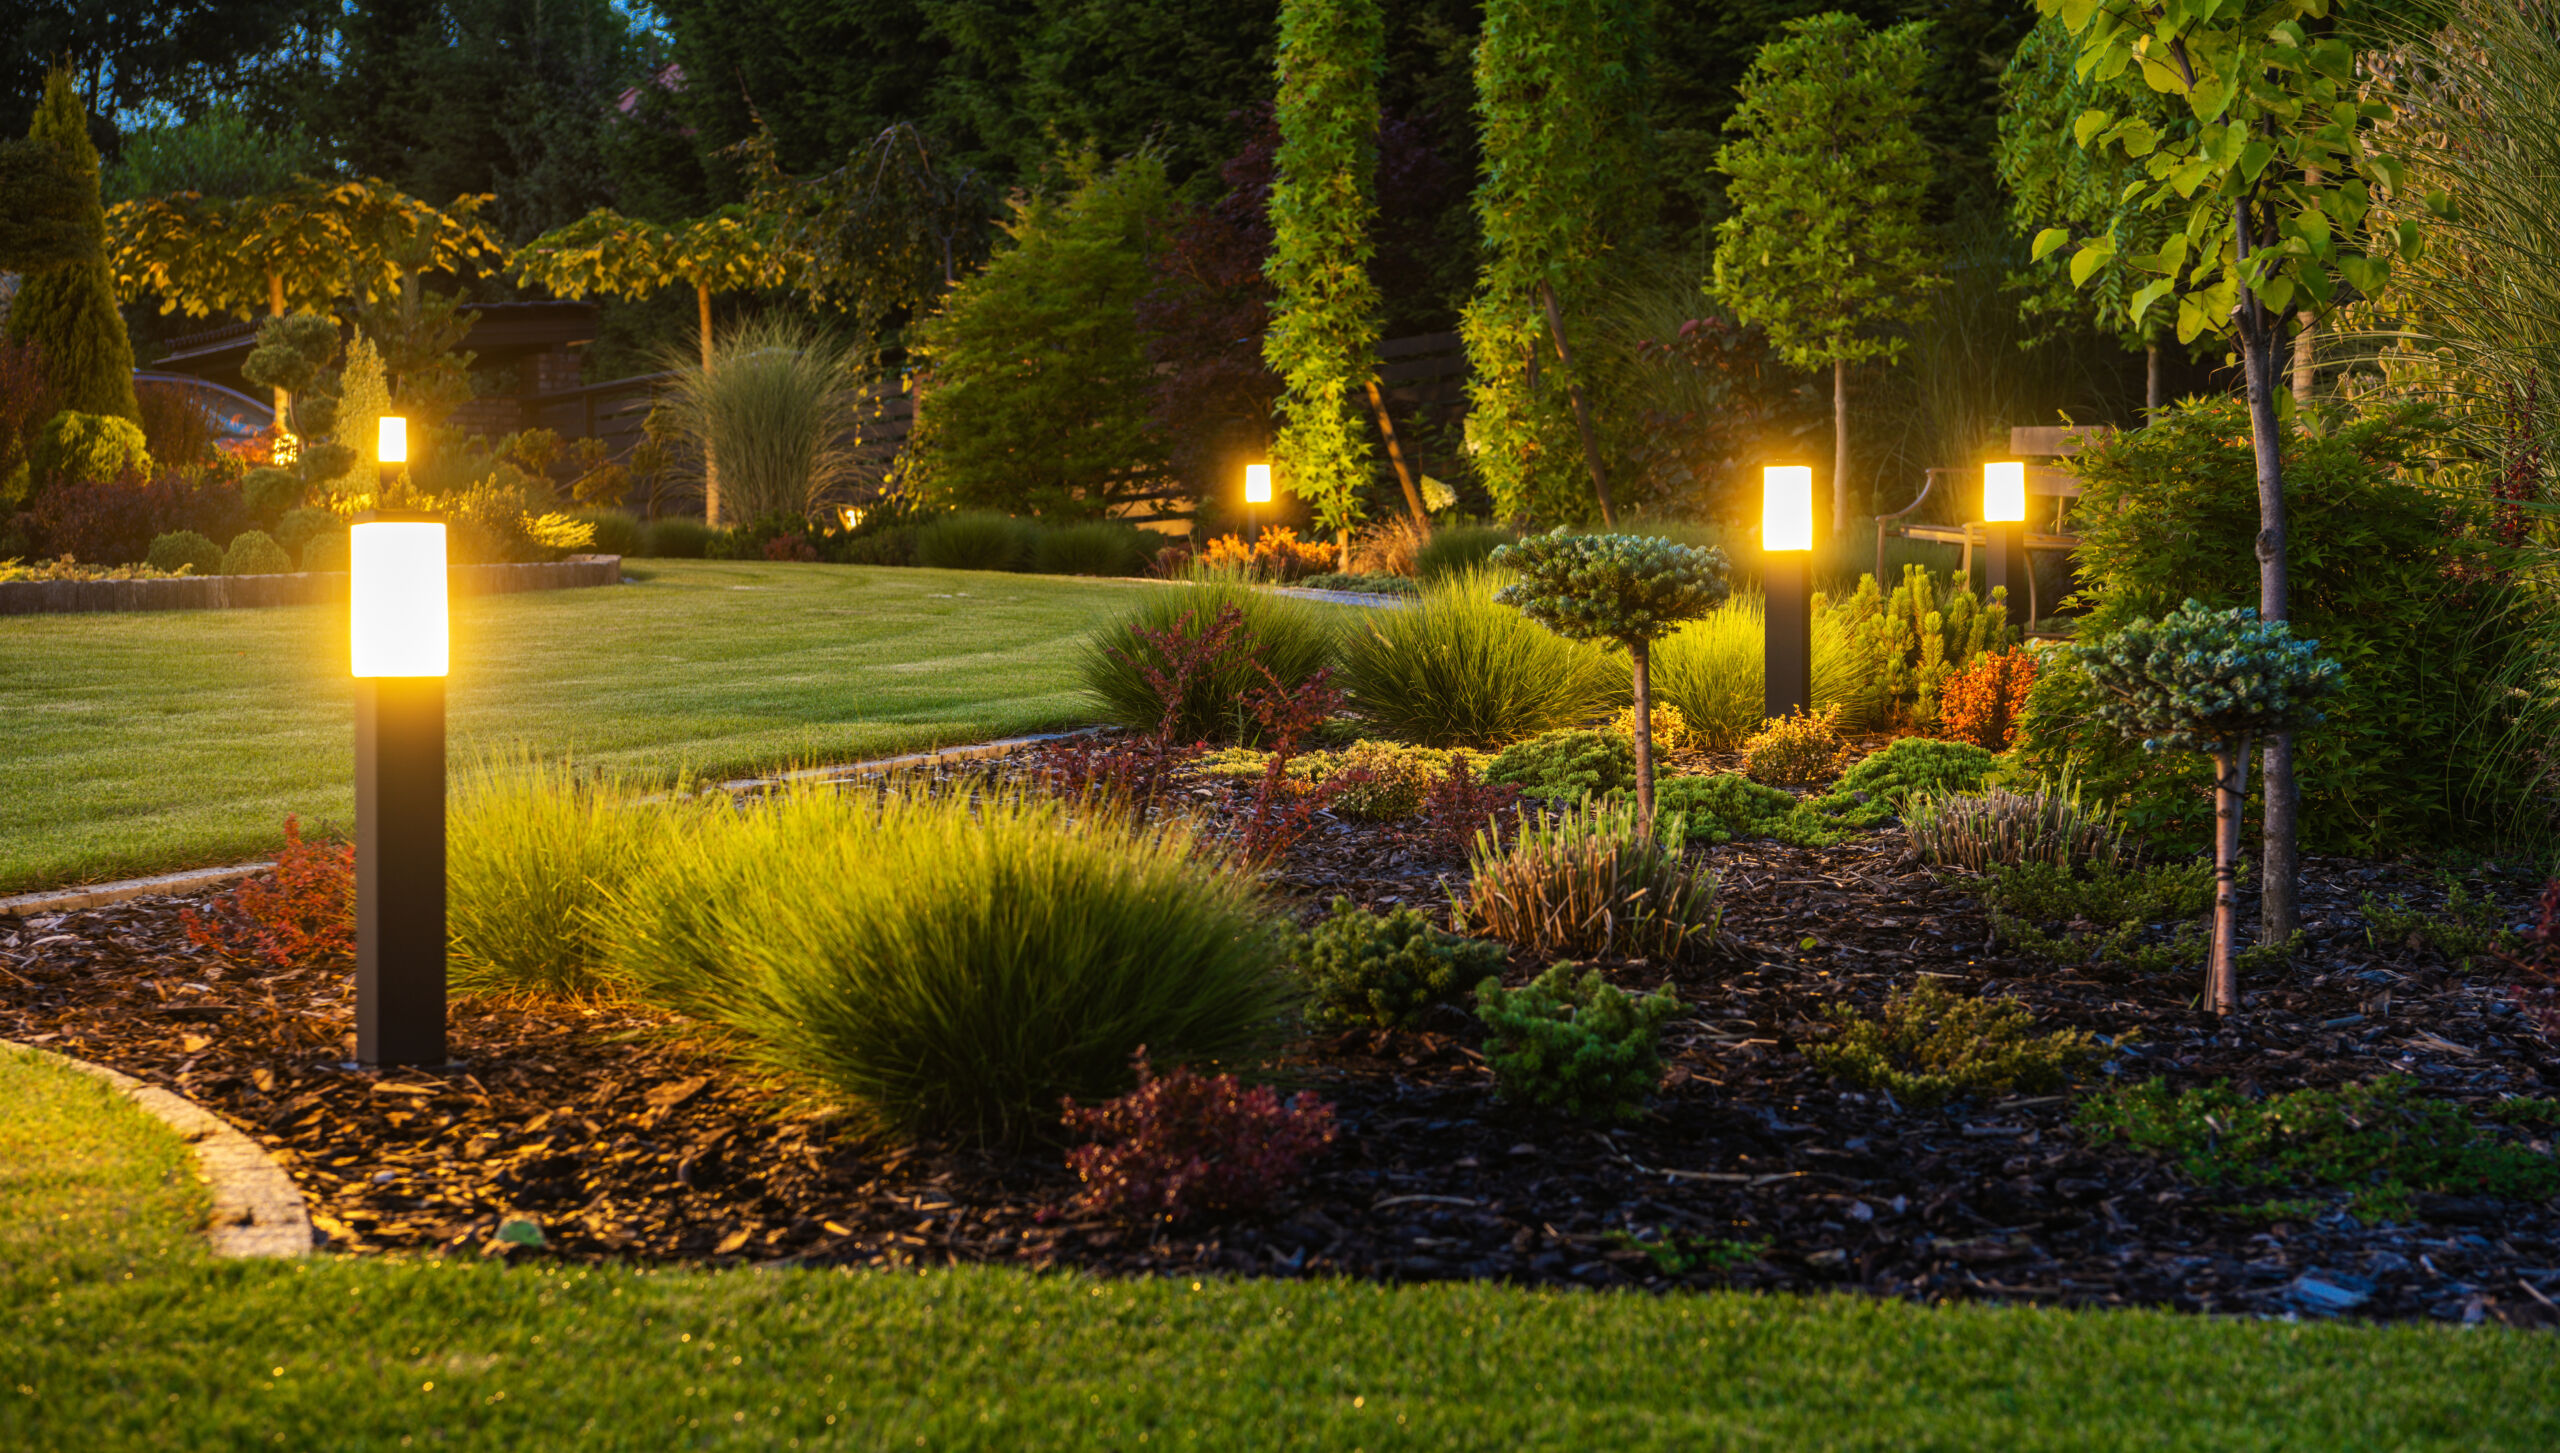 Panoramic Photo of LED Light Posts Illuminated Backyard Garden During Night Hours. Modern Backyard Outdoor Lighting Systems.a